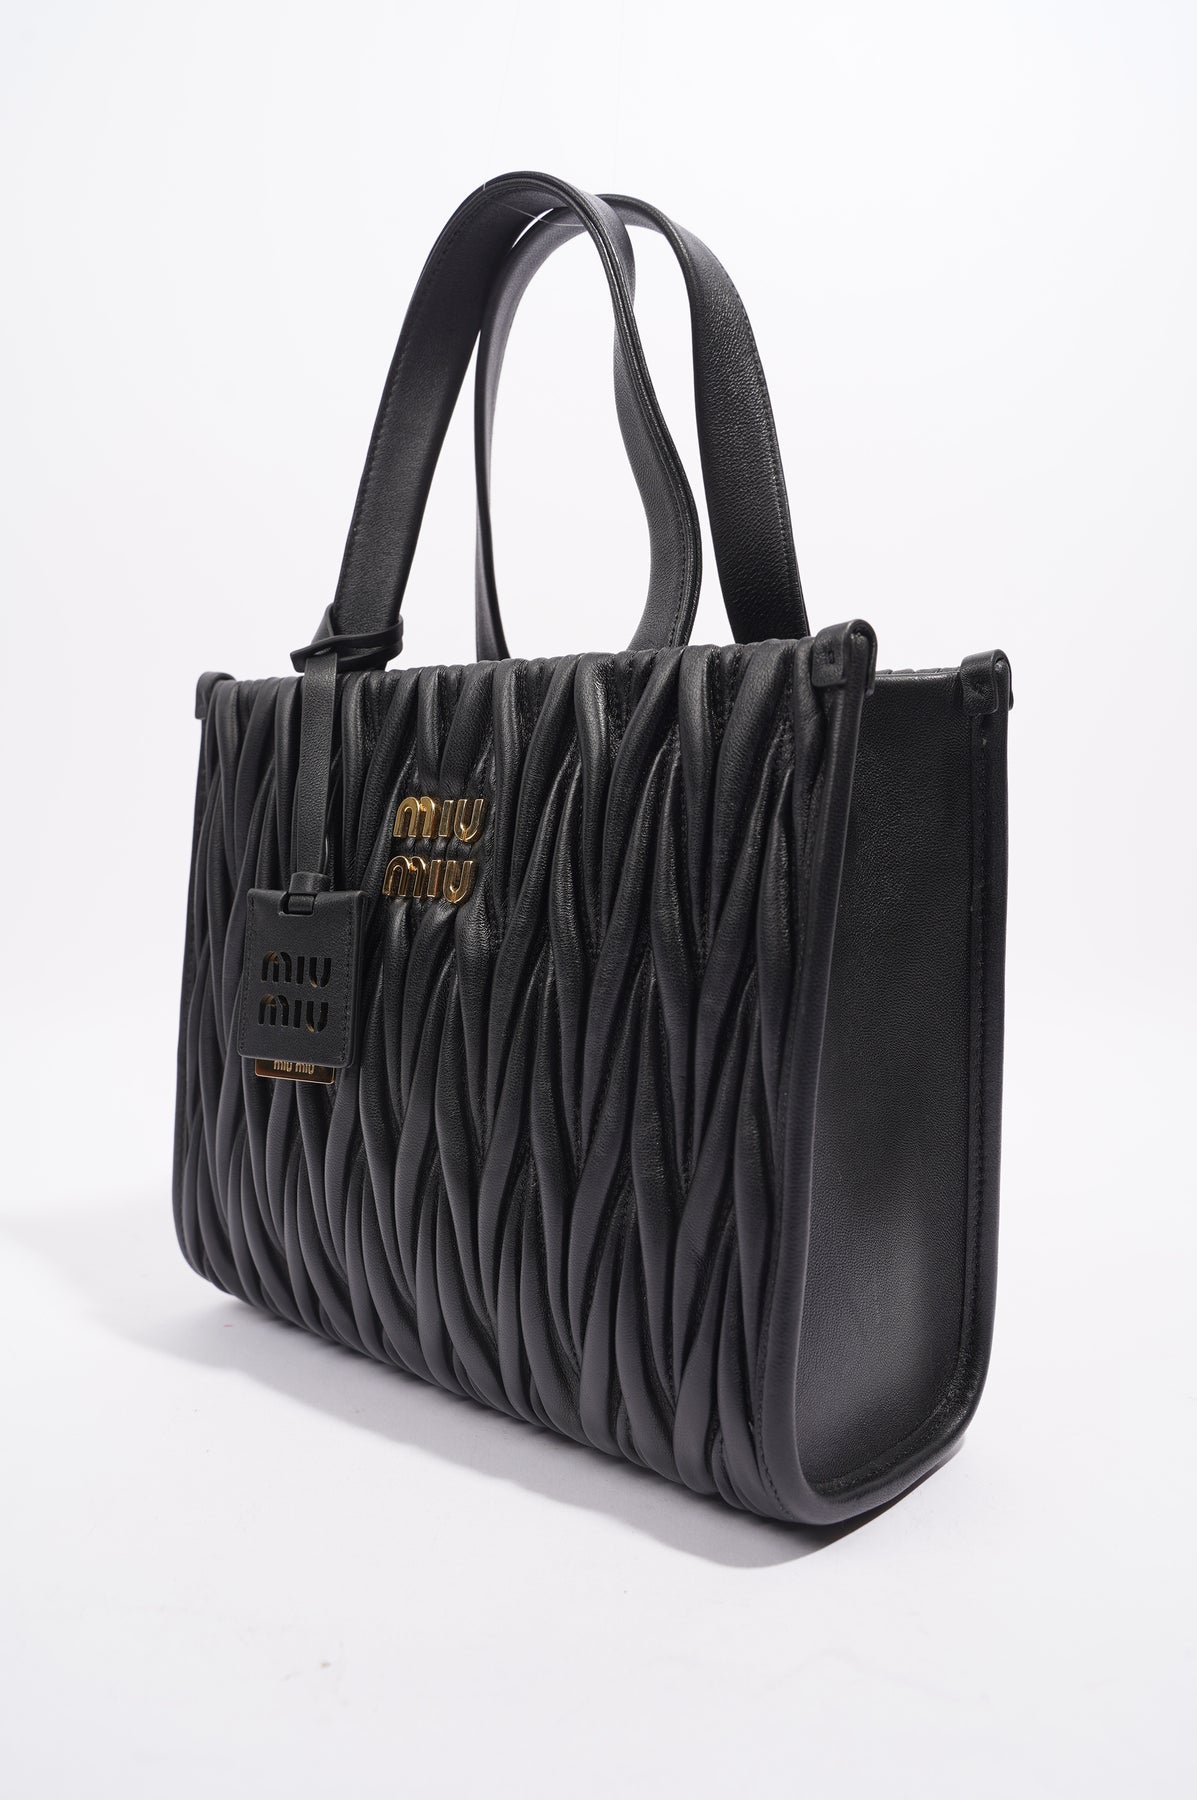 Miu Miu Black Nappa Leather Shoulder Bag framed top huge clutch